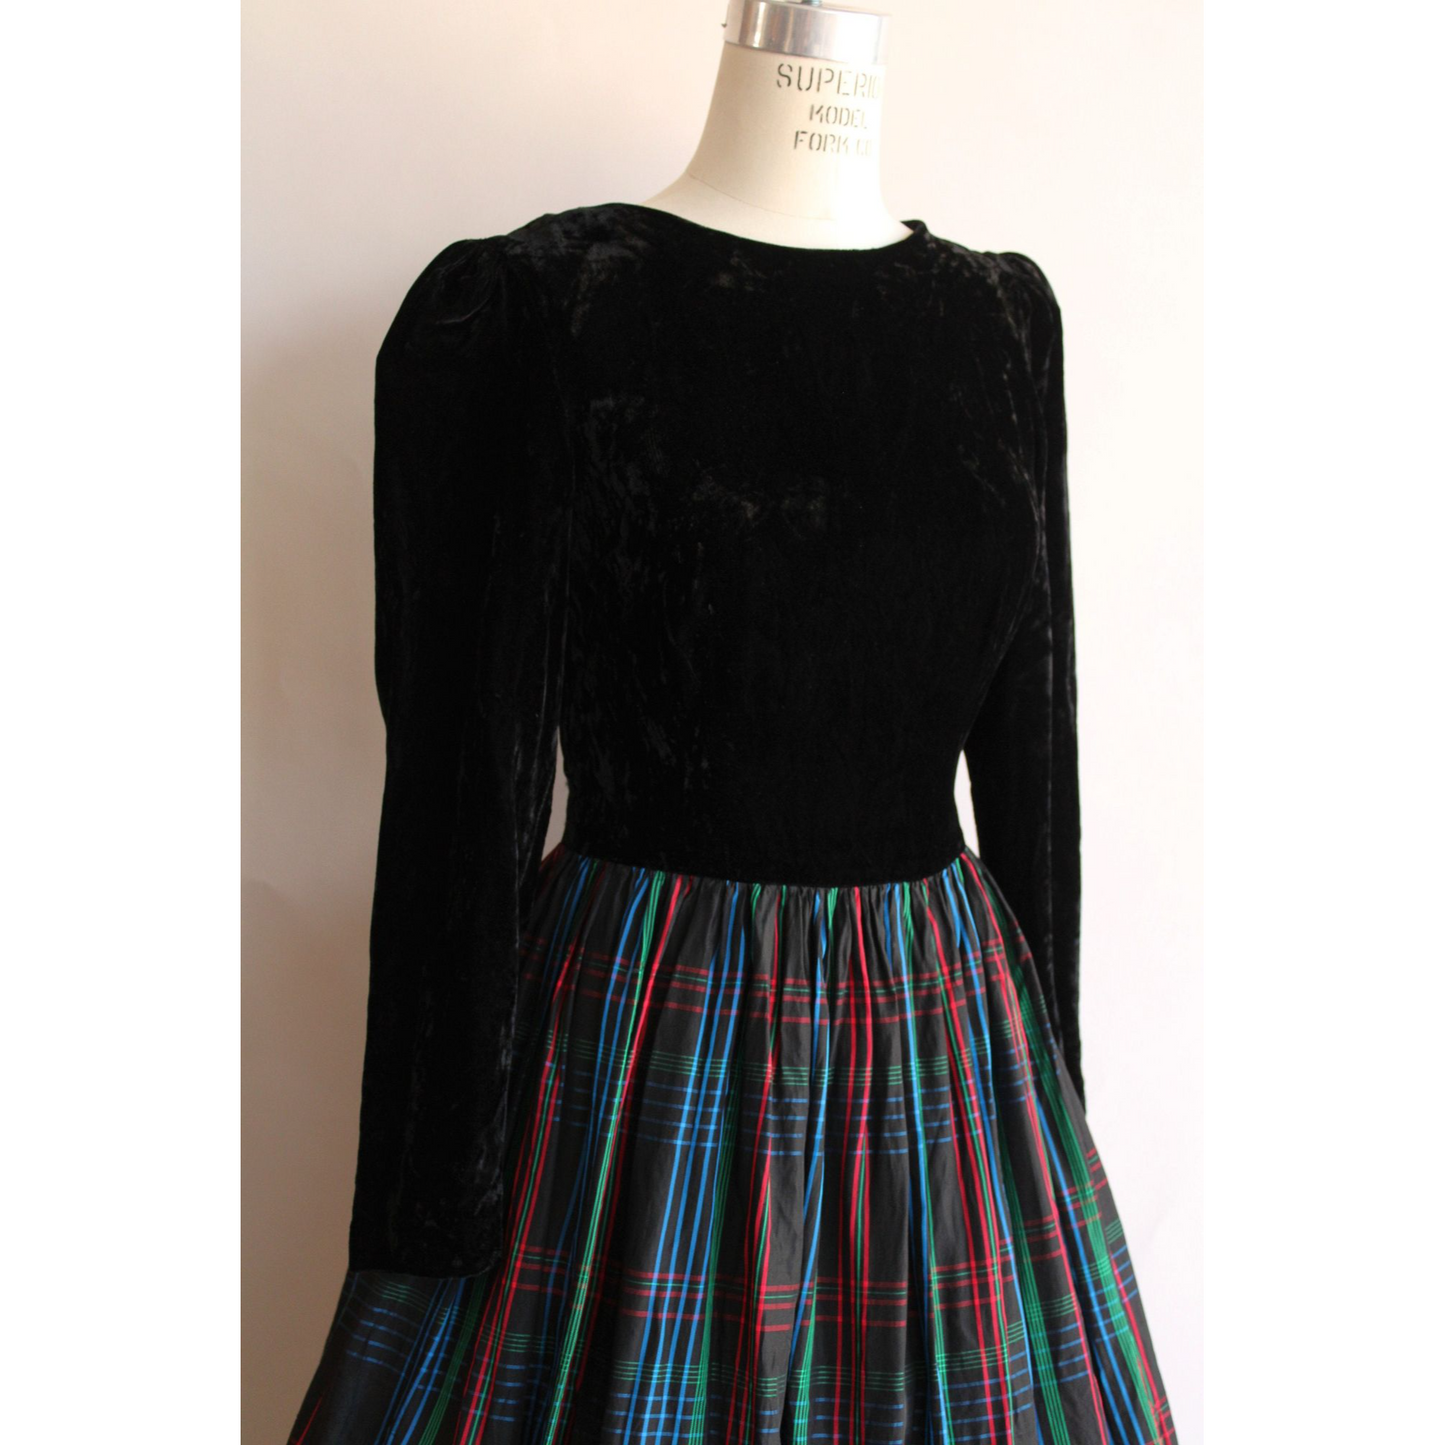 Vintage 1980s Black Velvet and Plaid Fit and Flare Dress